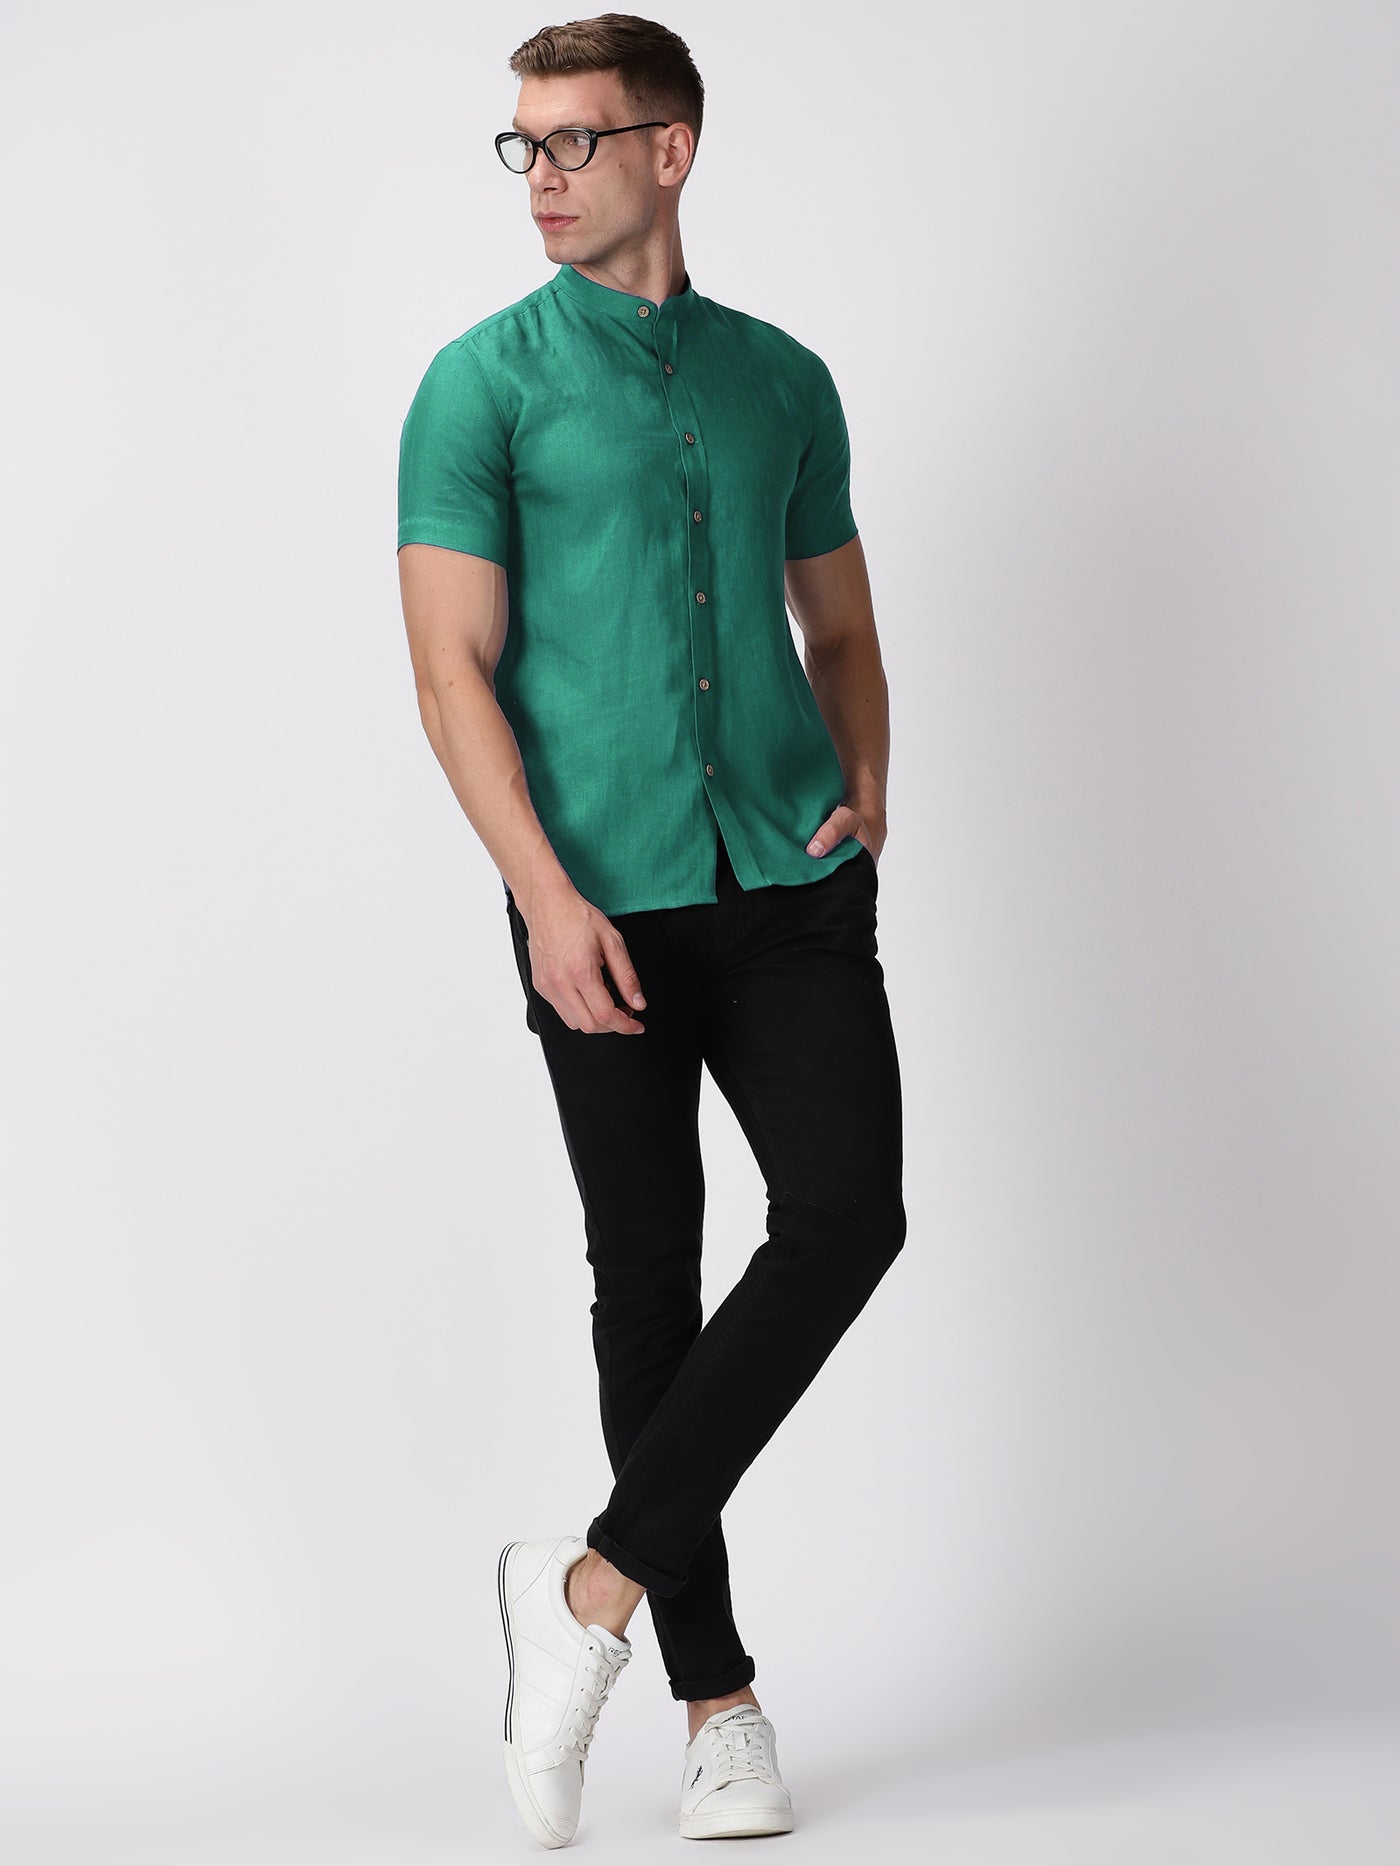 Ronan - Pure Linen Mandarin Collar Half Sleeve Shirt - Teal Green